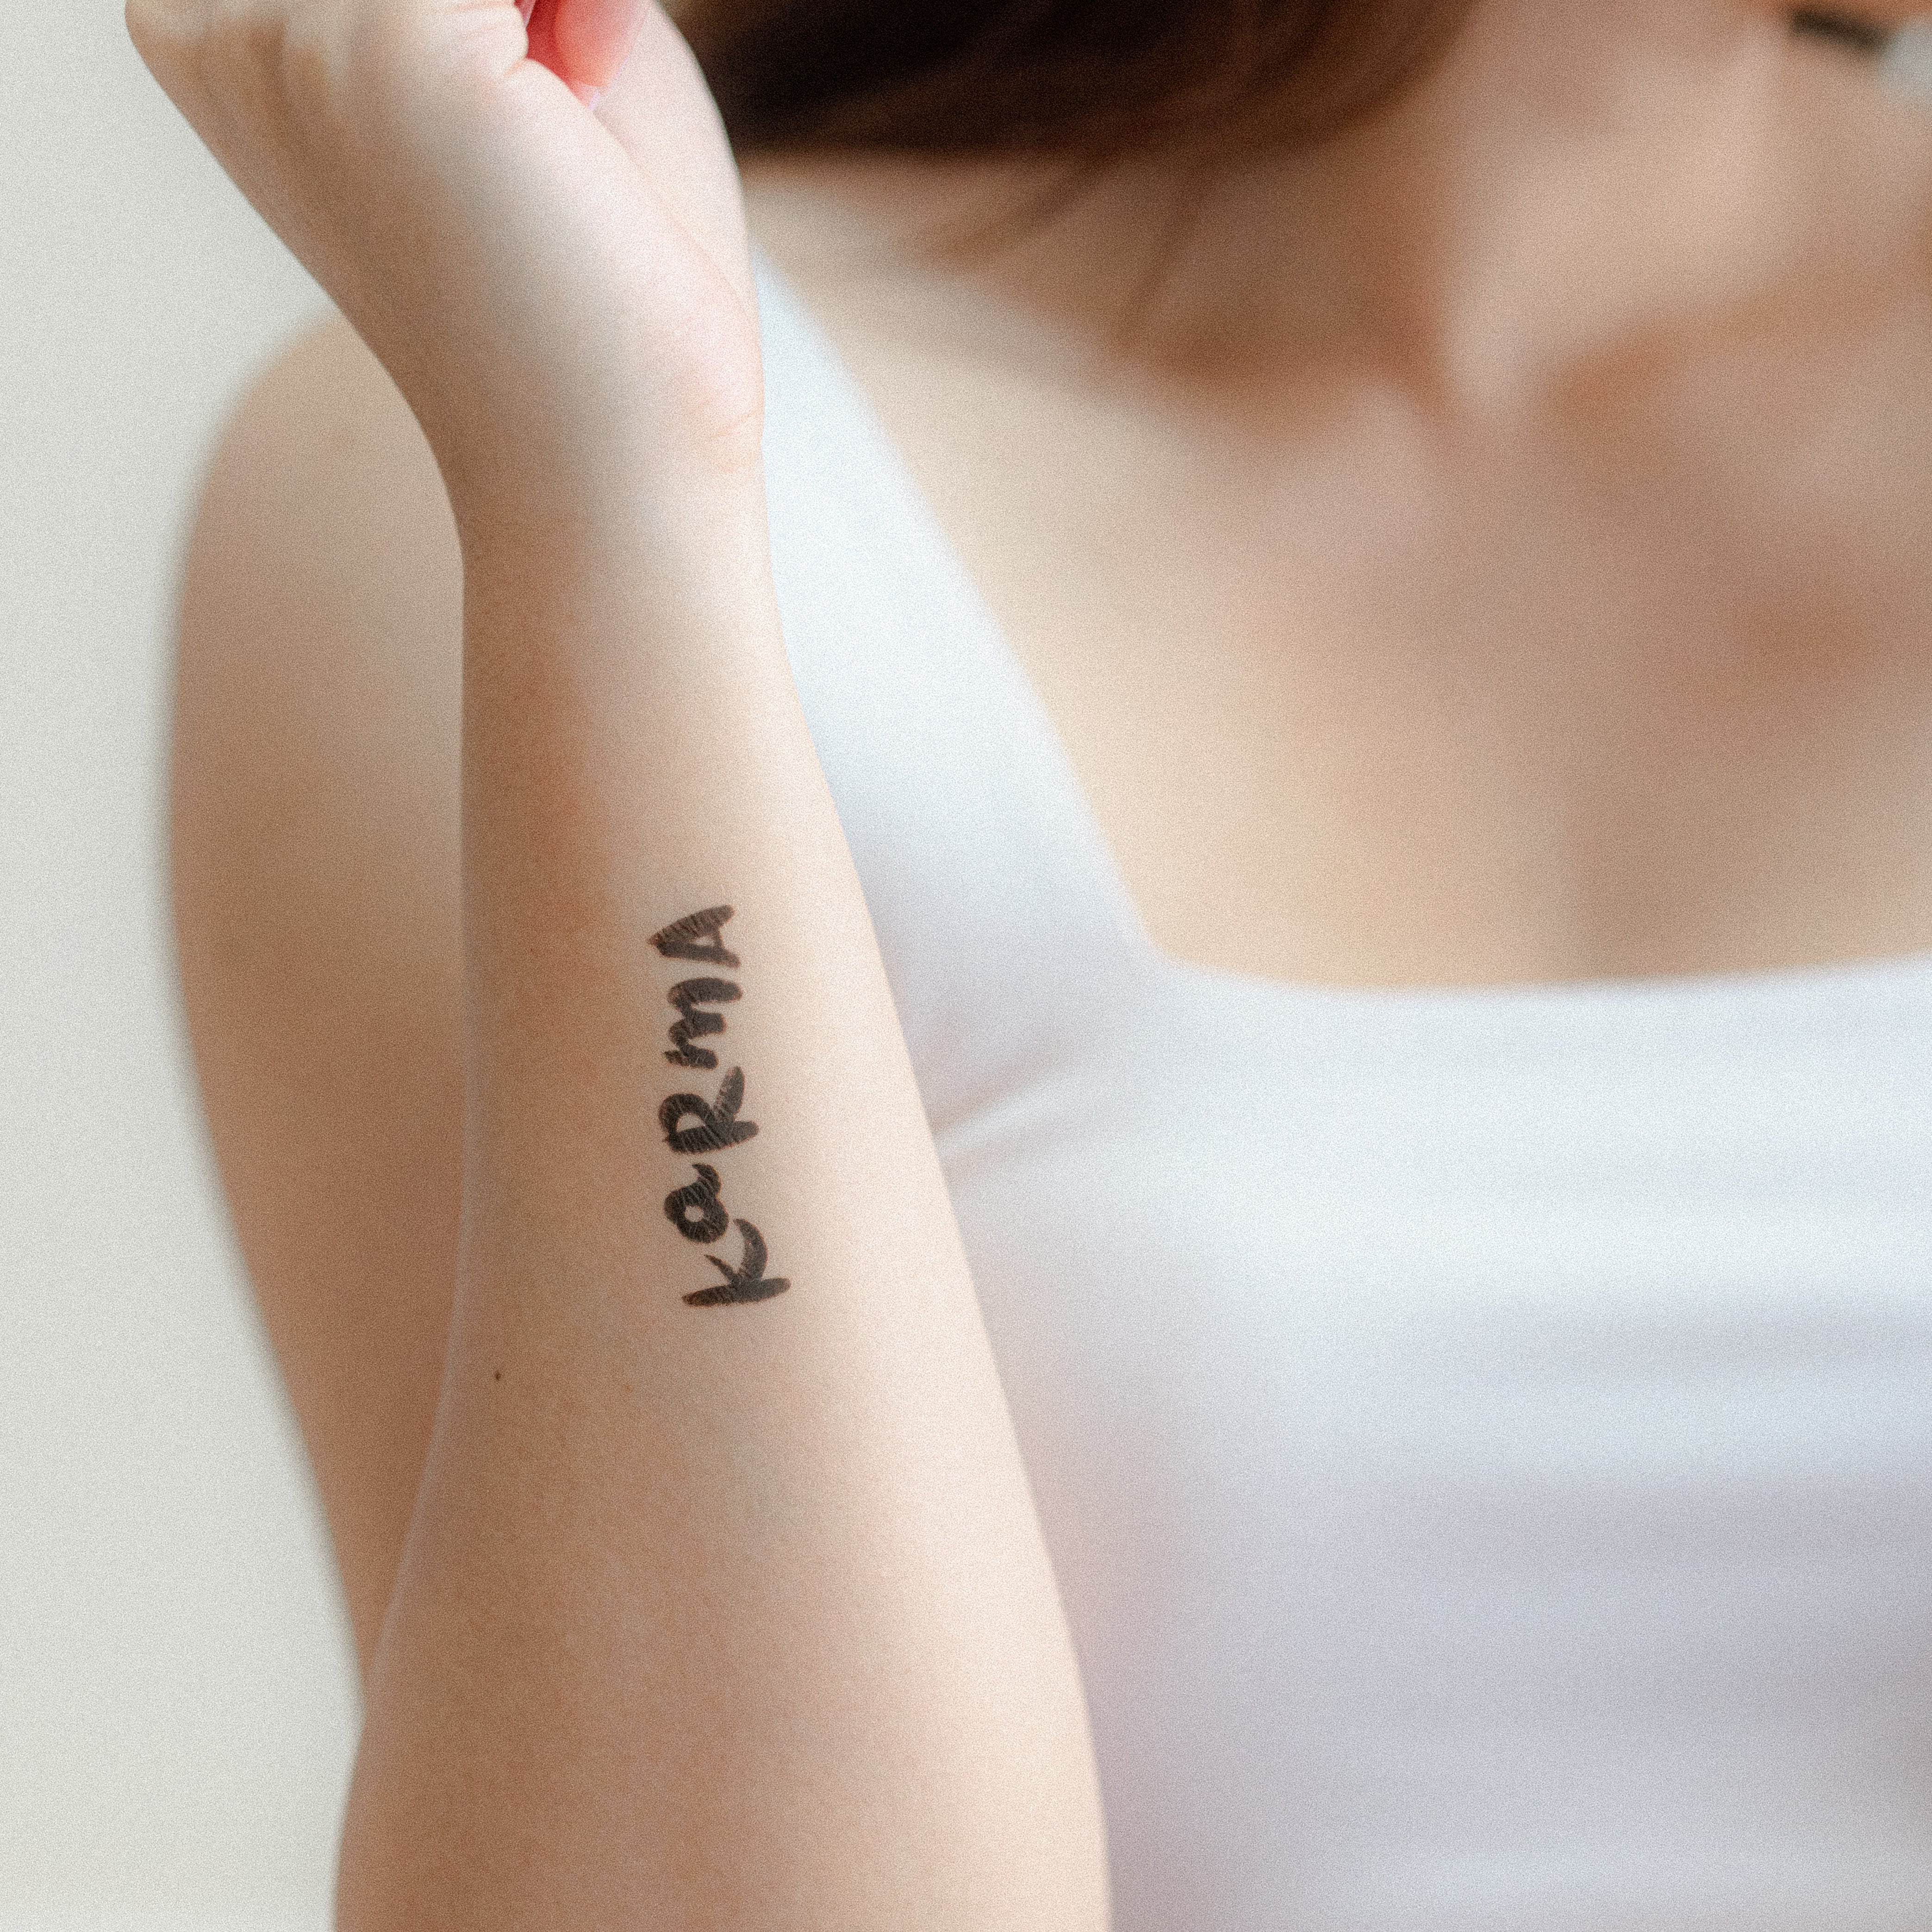 KARMA #karma #pmtsketch #tattoo #fyp #fürdich | TikTok